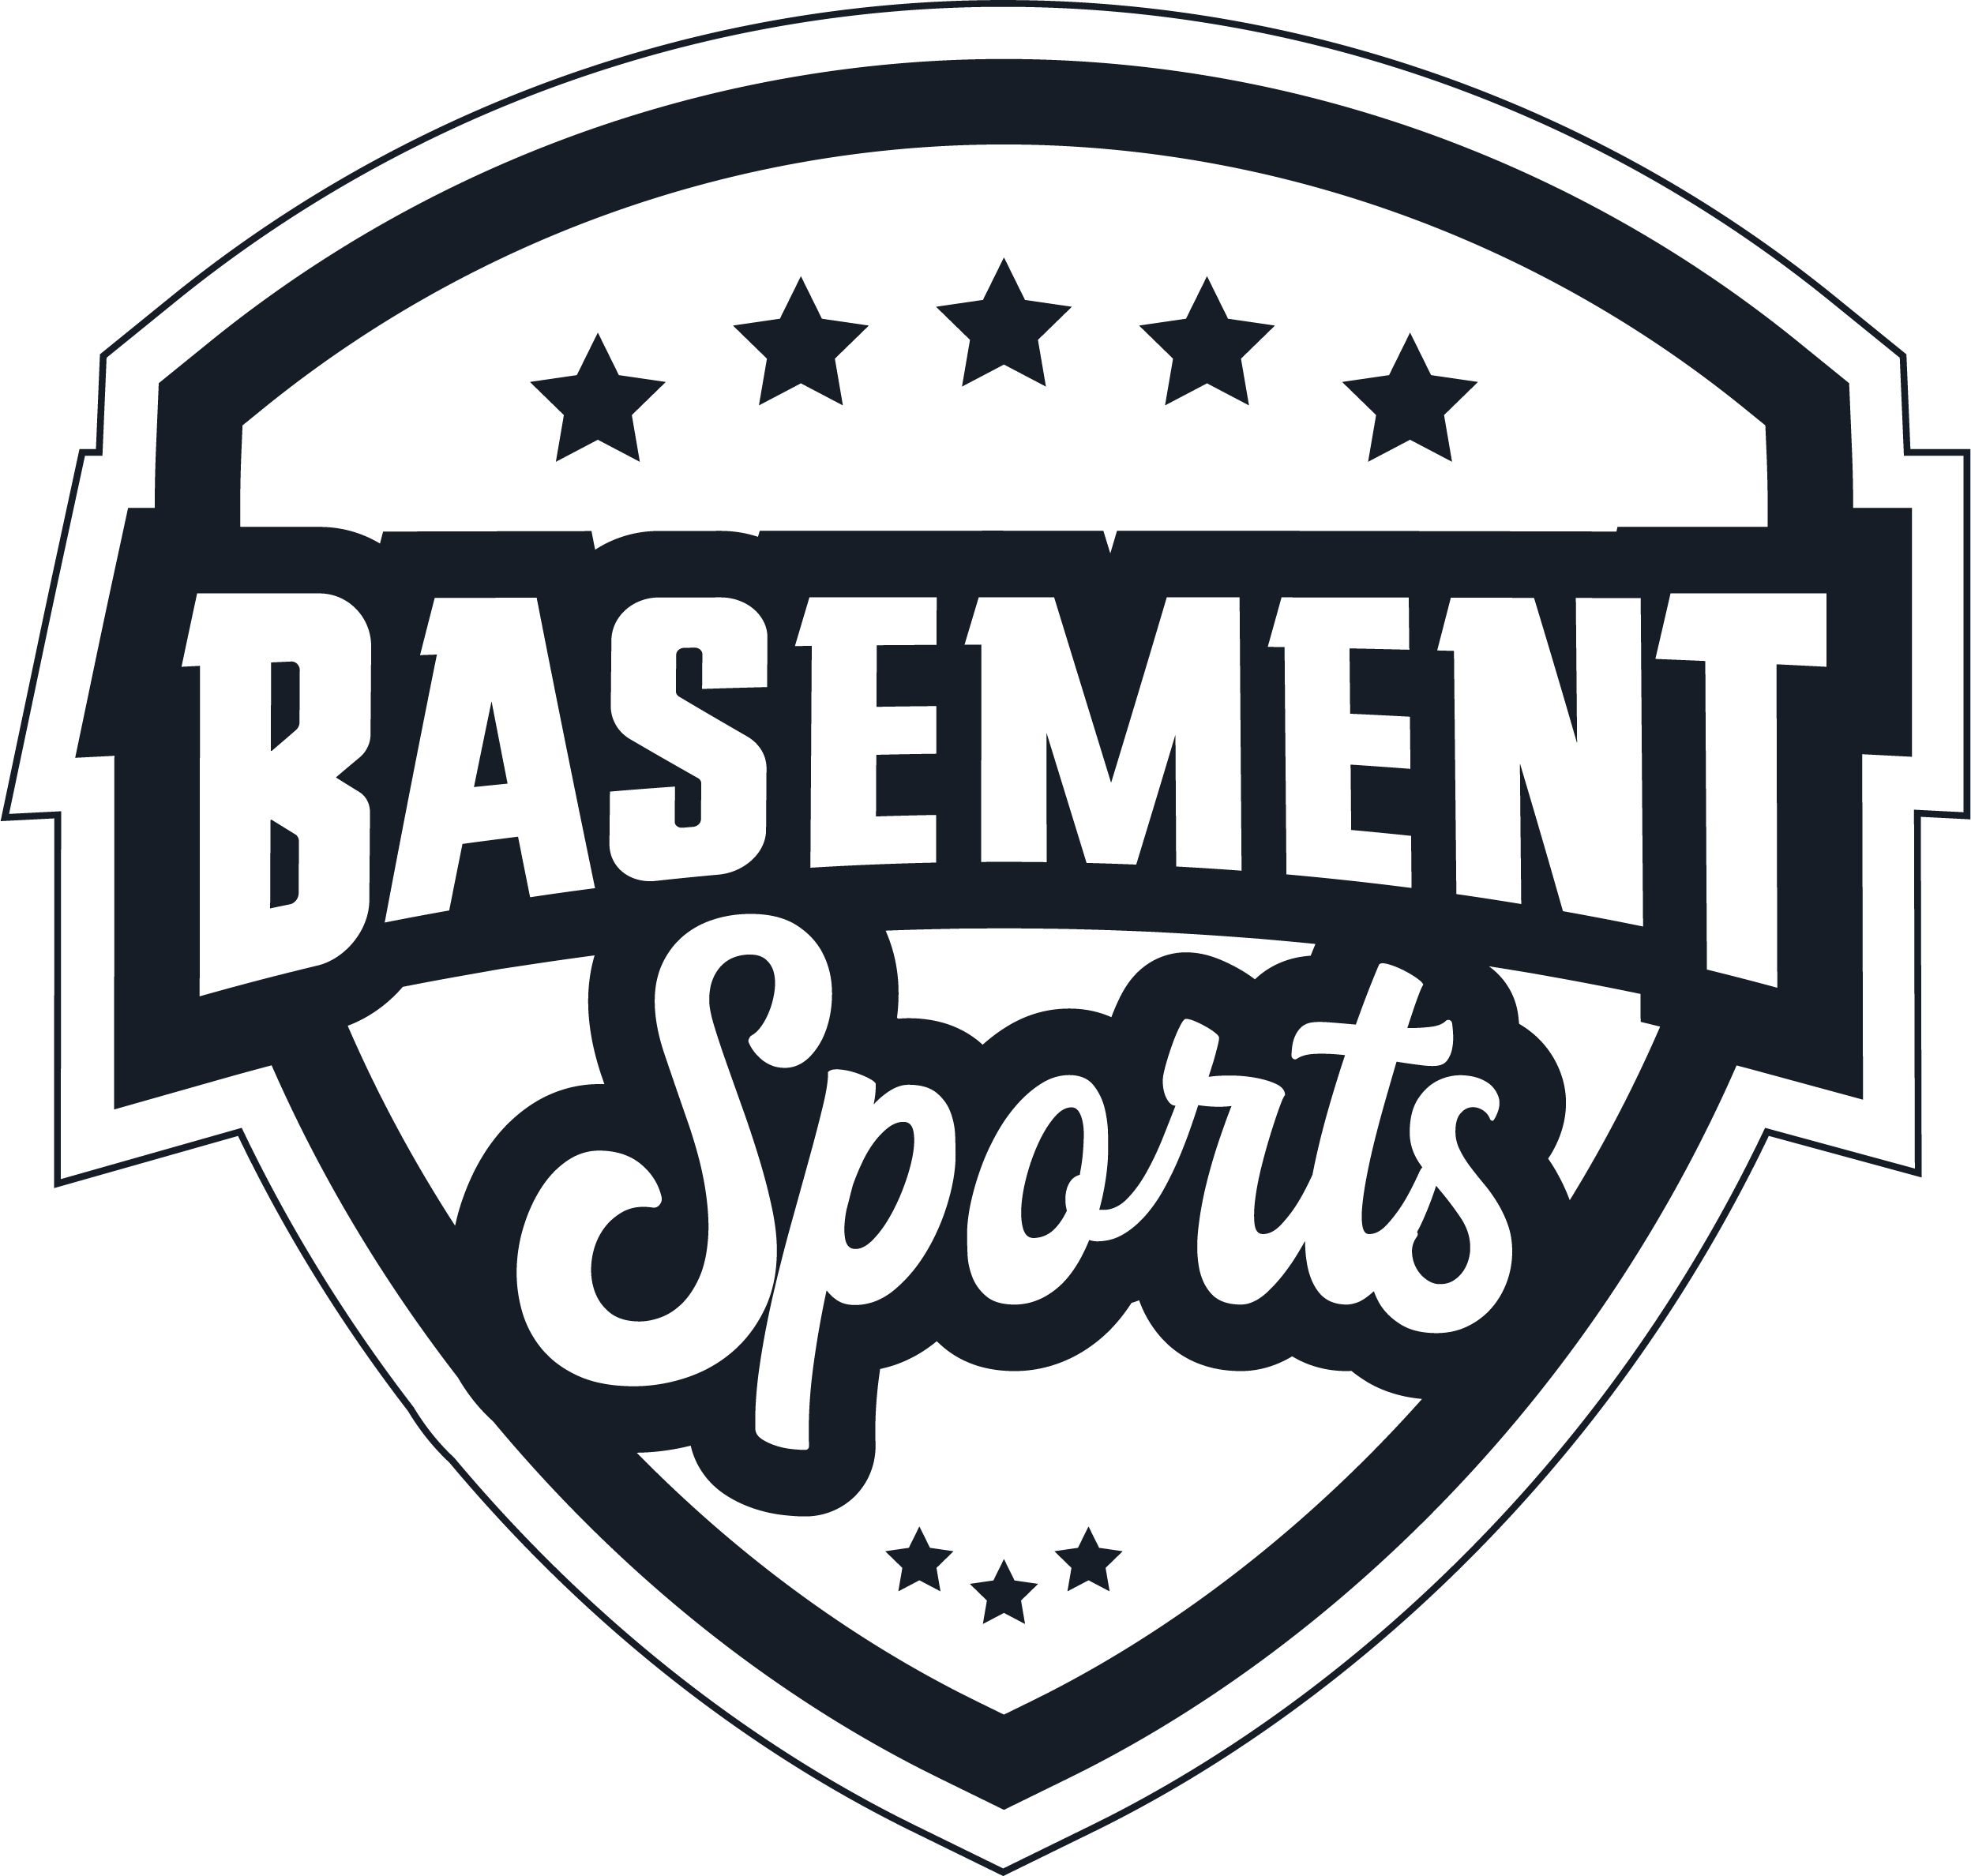 Basement Sports